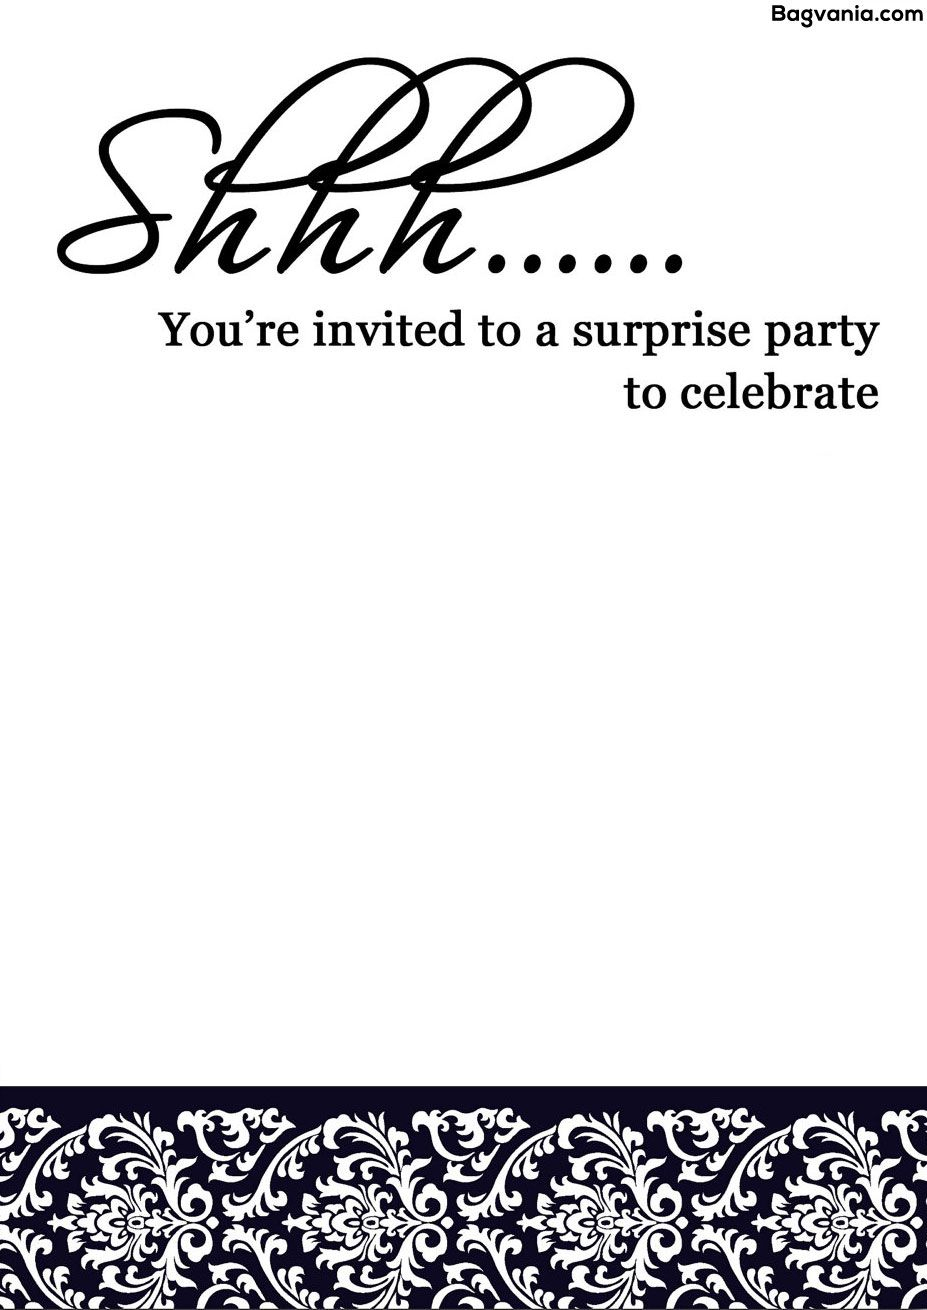 Free Printable Surprise Birthday Invitations Bagvania Free with regard to proportions 927 X 1310